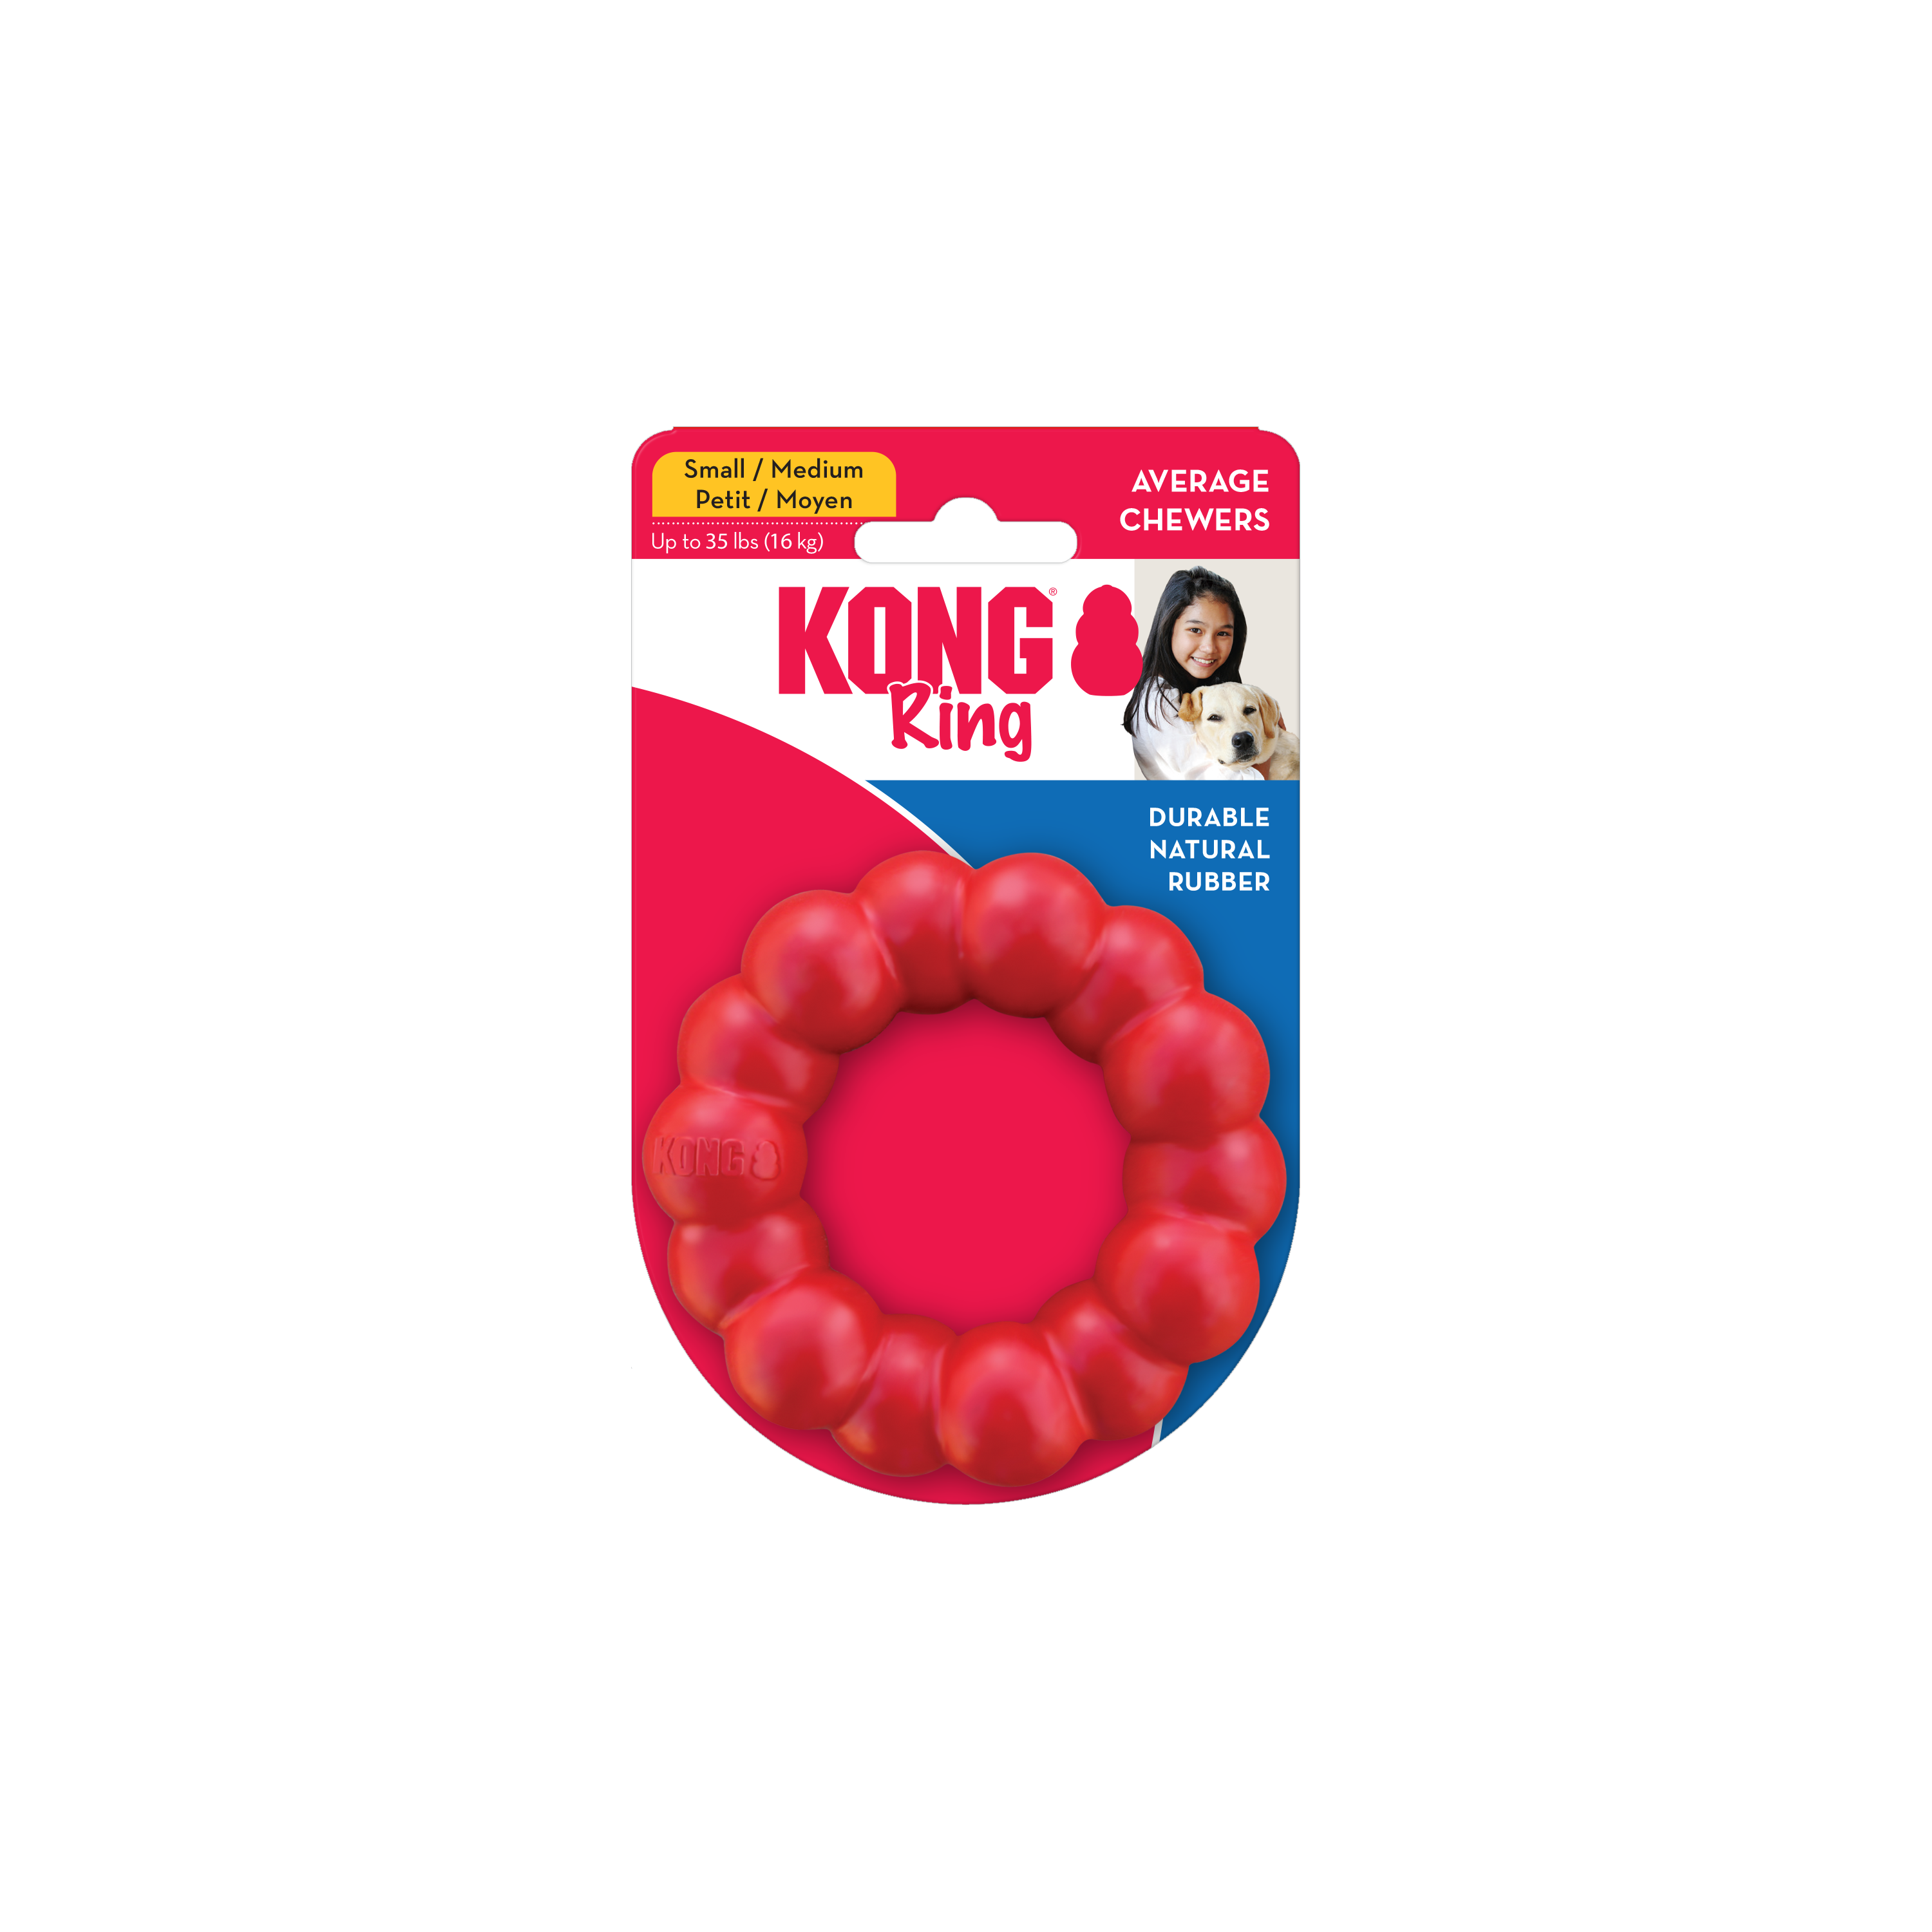 KONG Ring onpack product image